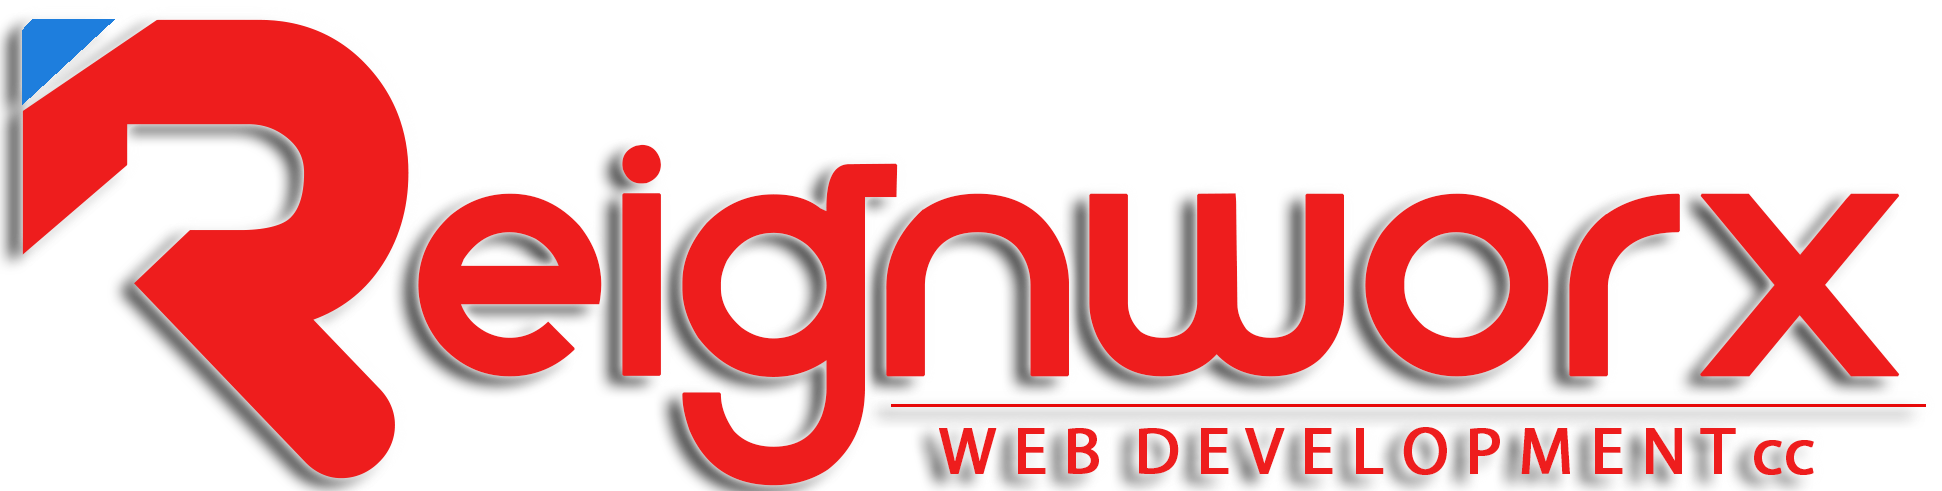 Reignworx Web Development CC - Support